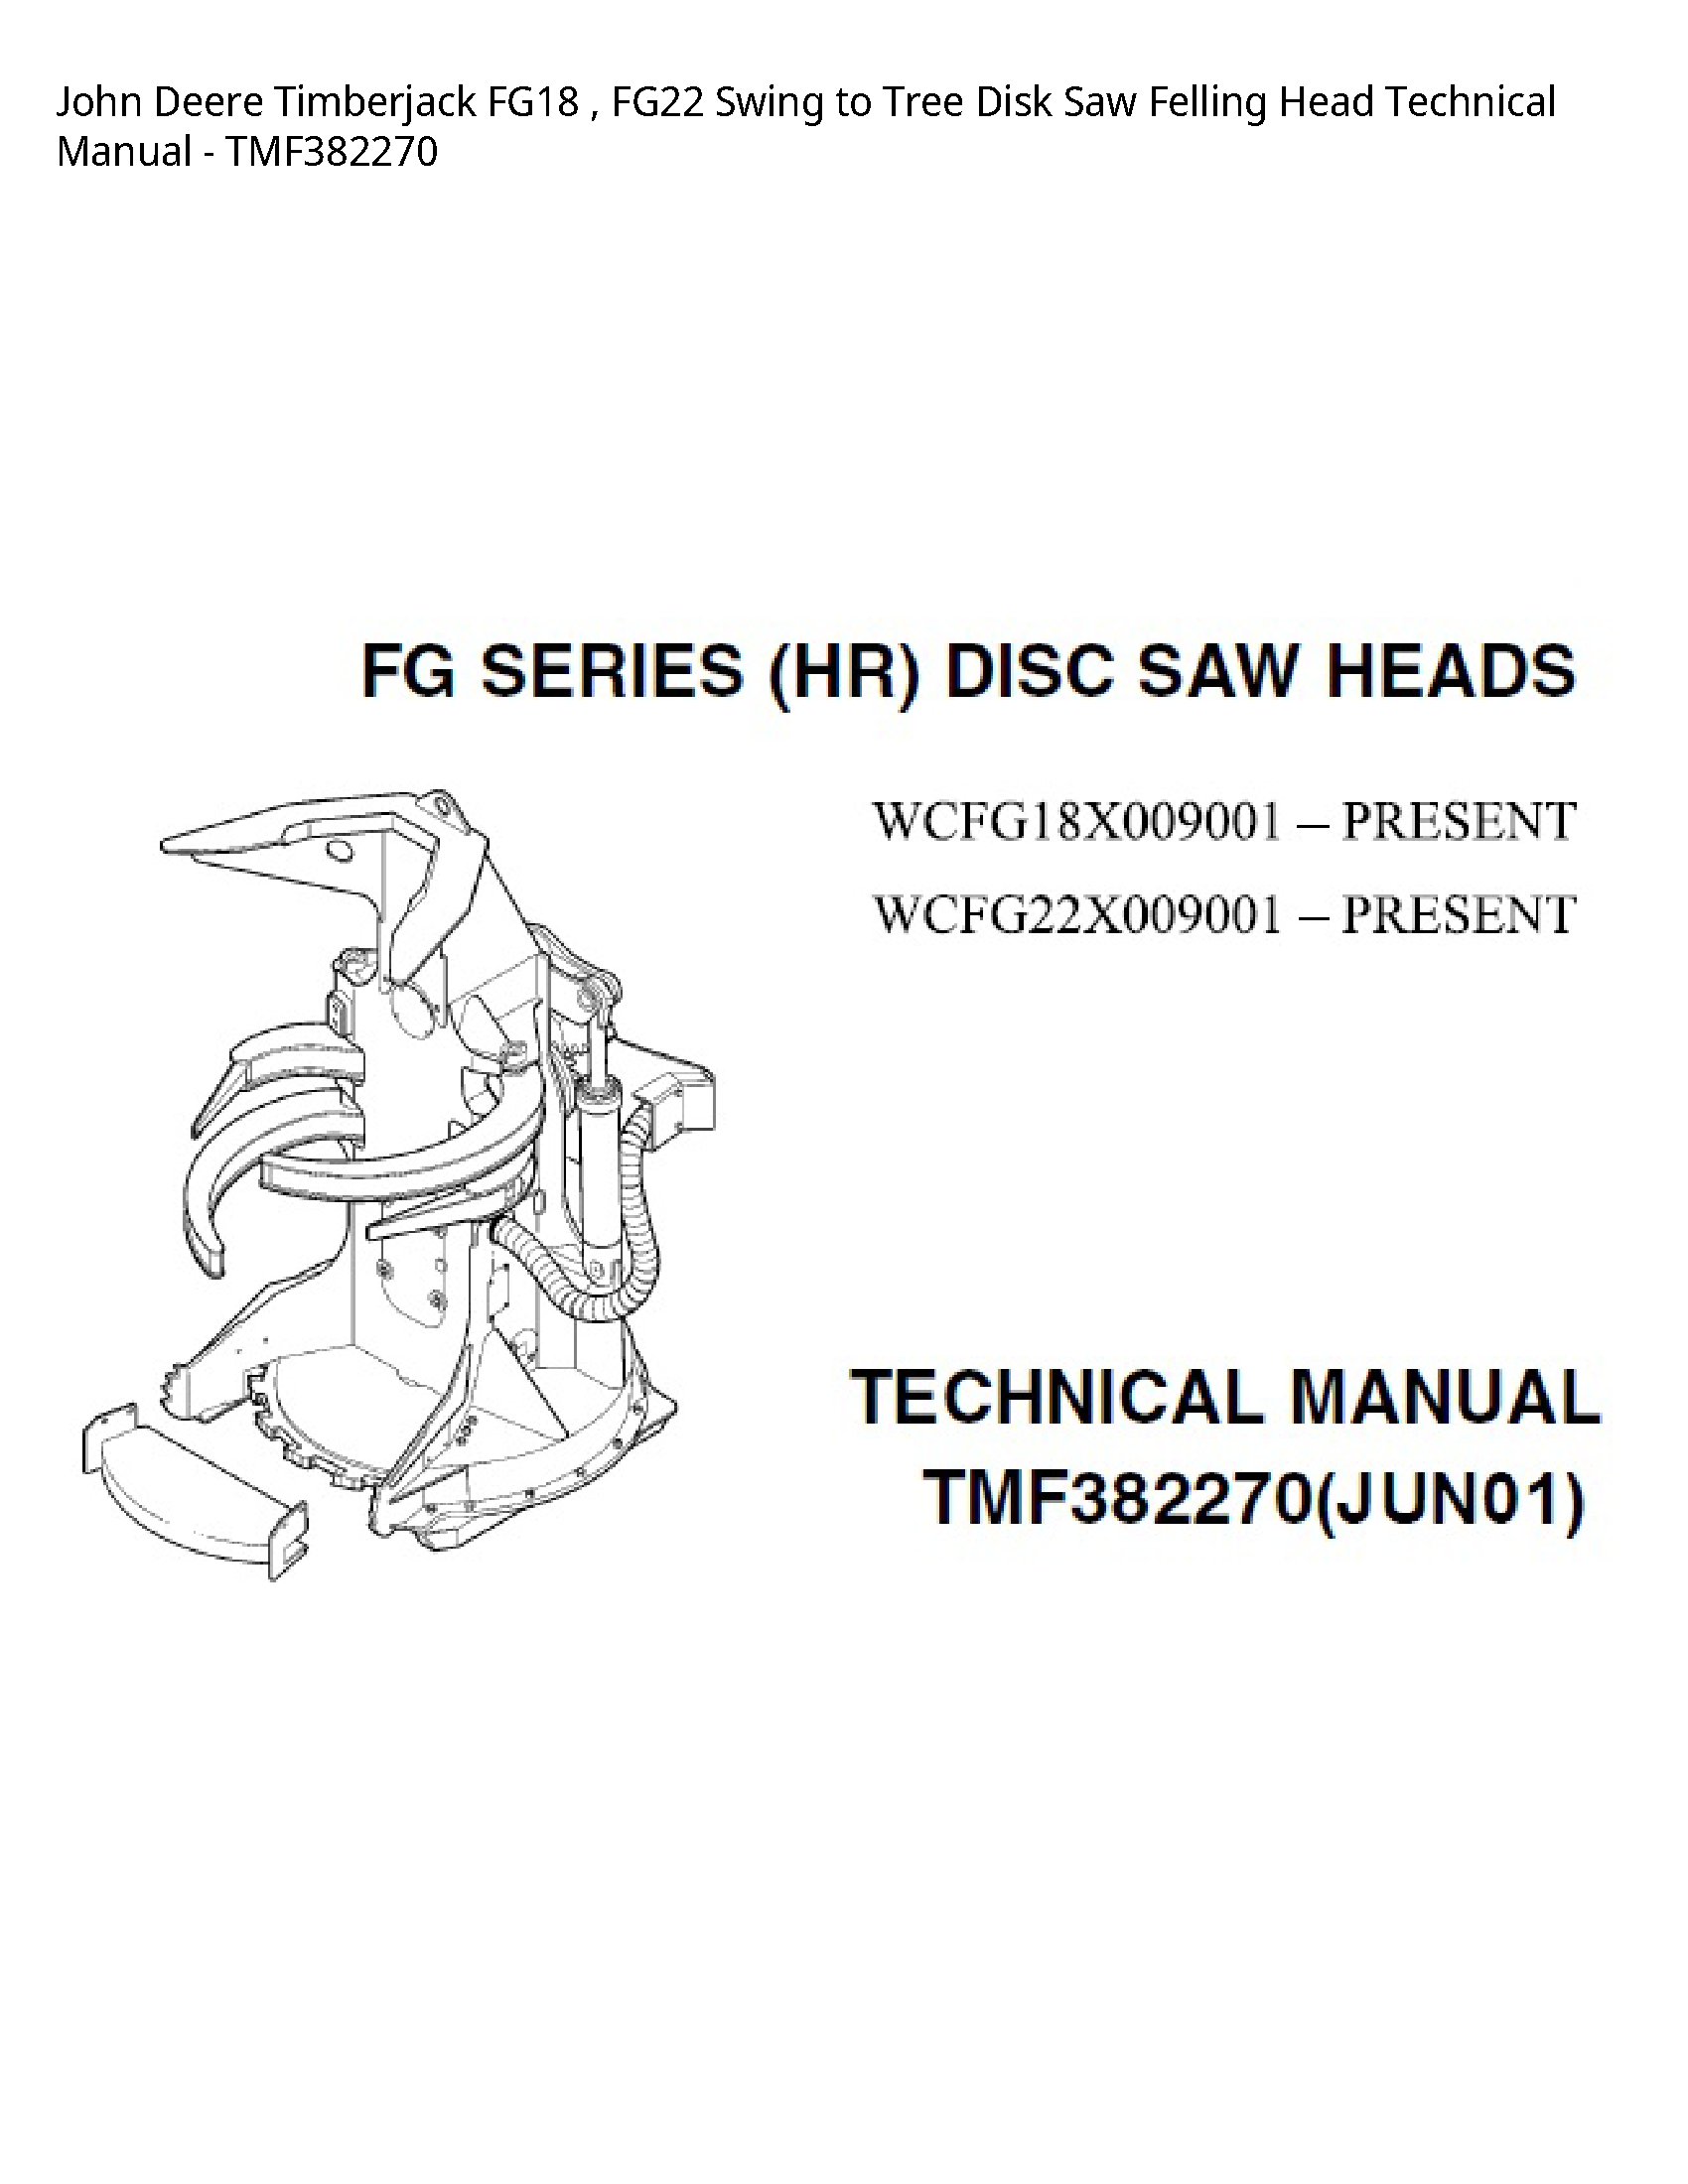 John Deere FG18 Timberjack Swing to Tree Disk Saw Felling Head Technical manual